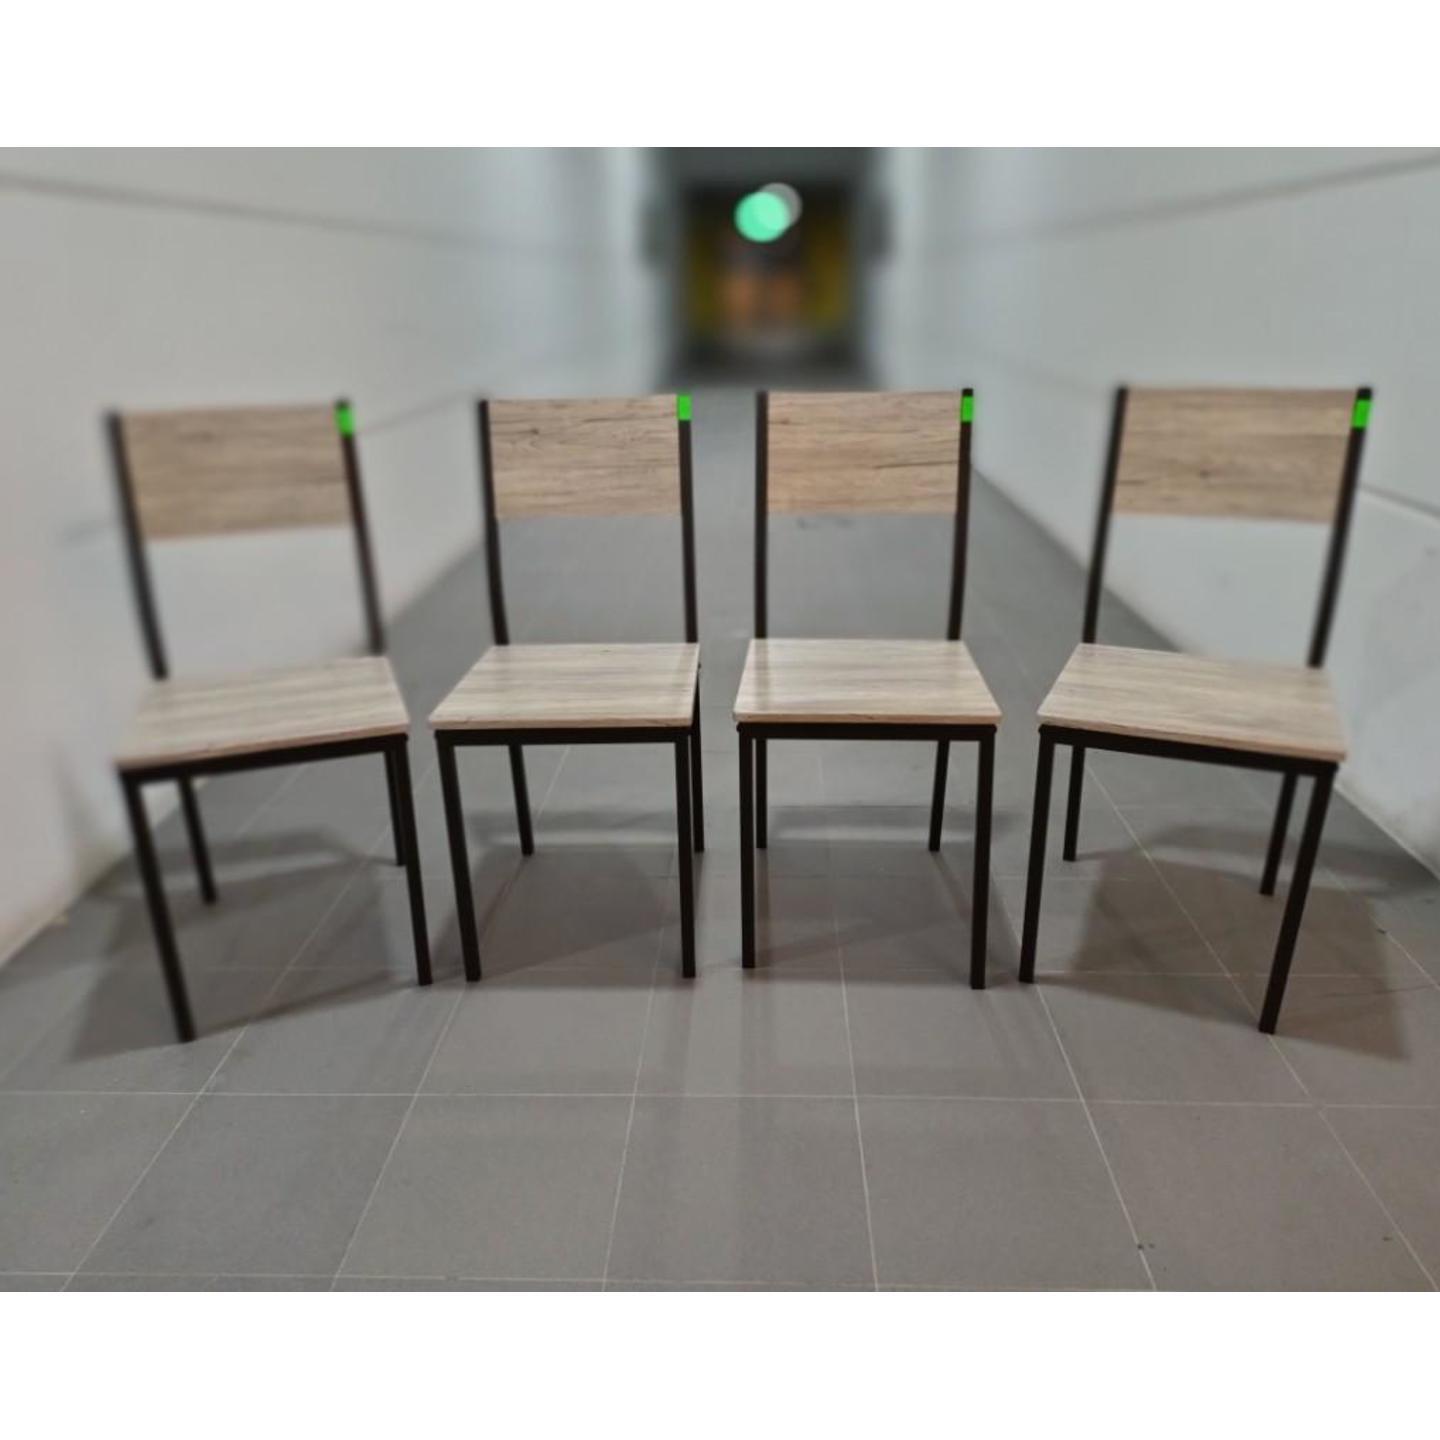 4 x FReDDY Dining Chairs in Light Oak Print